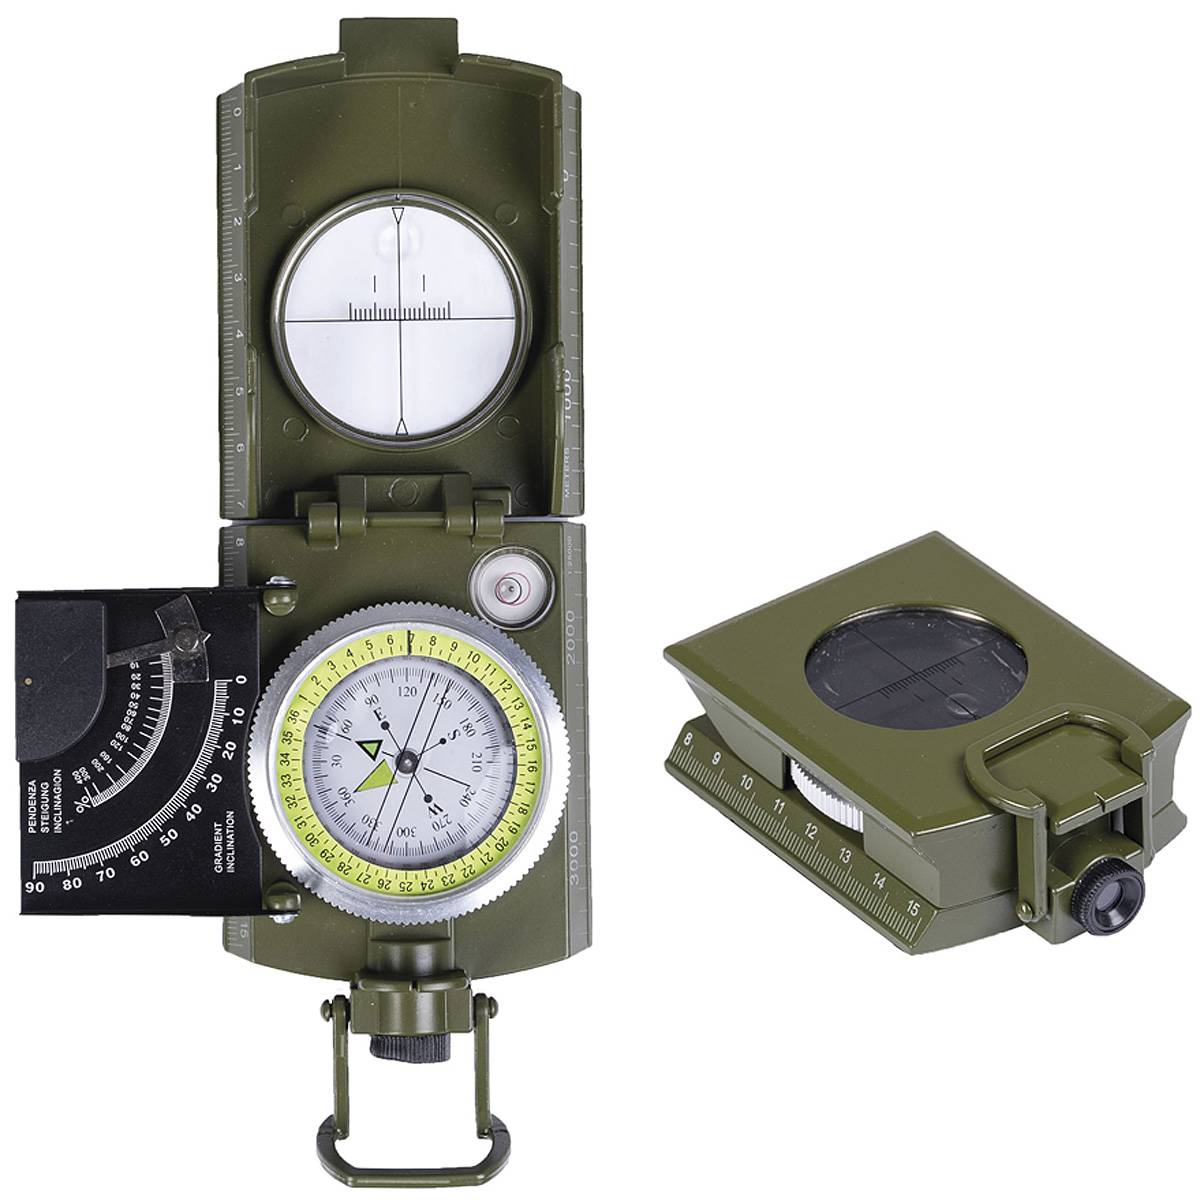 Bundeswehr Armeekompass mit Etui oliv Kompass Metallgehäuse Marschkompass DHL 